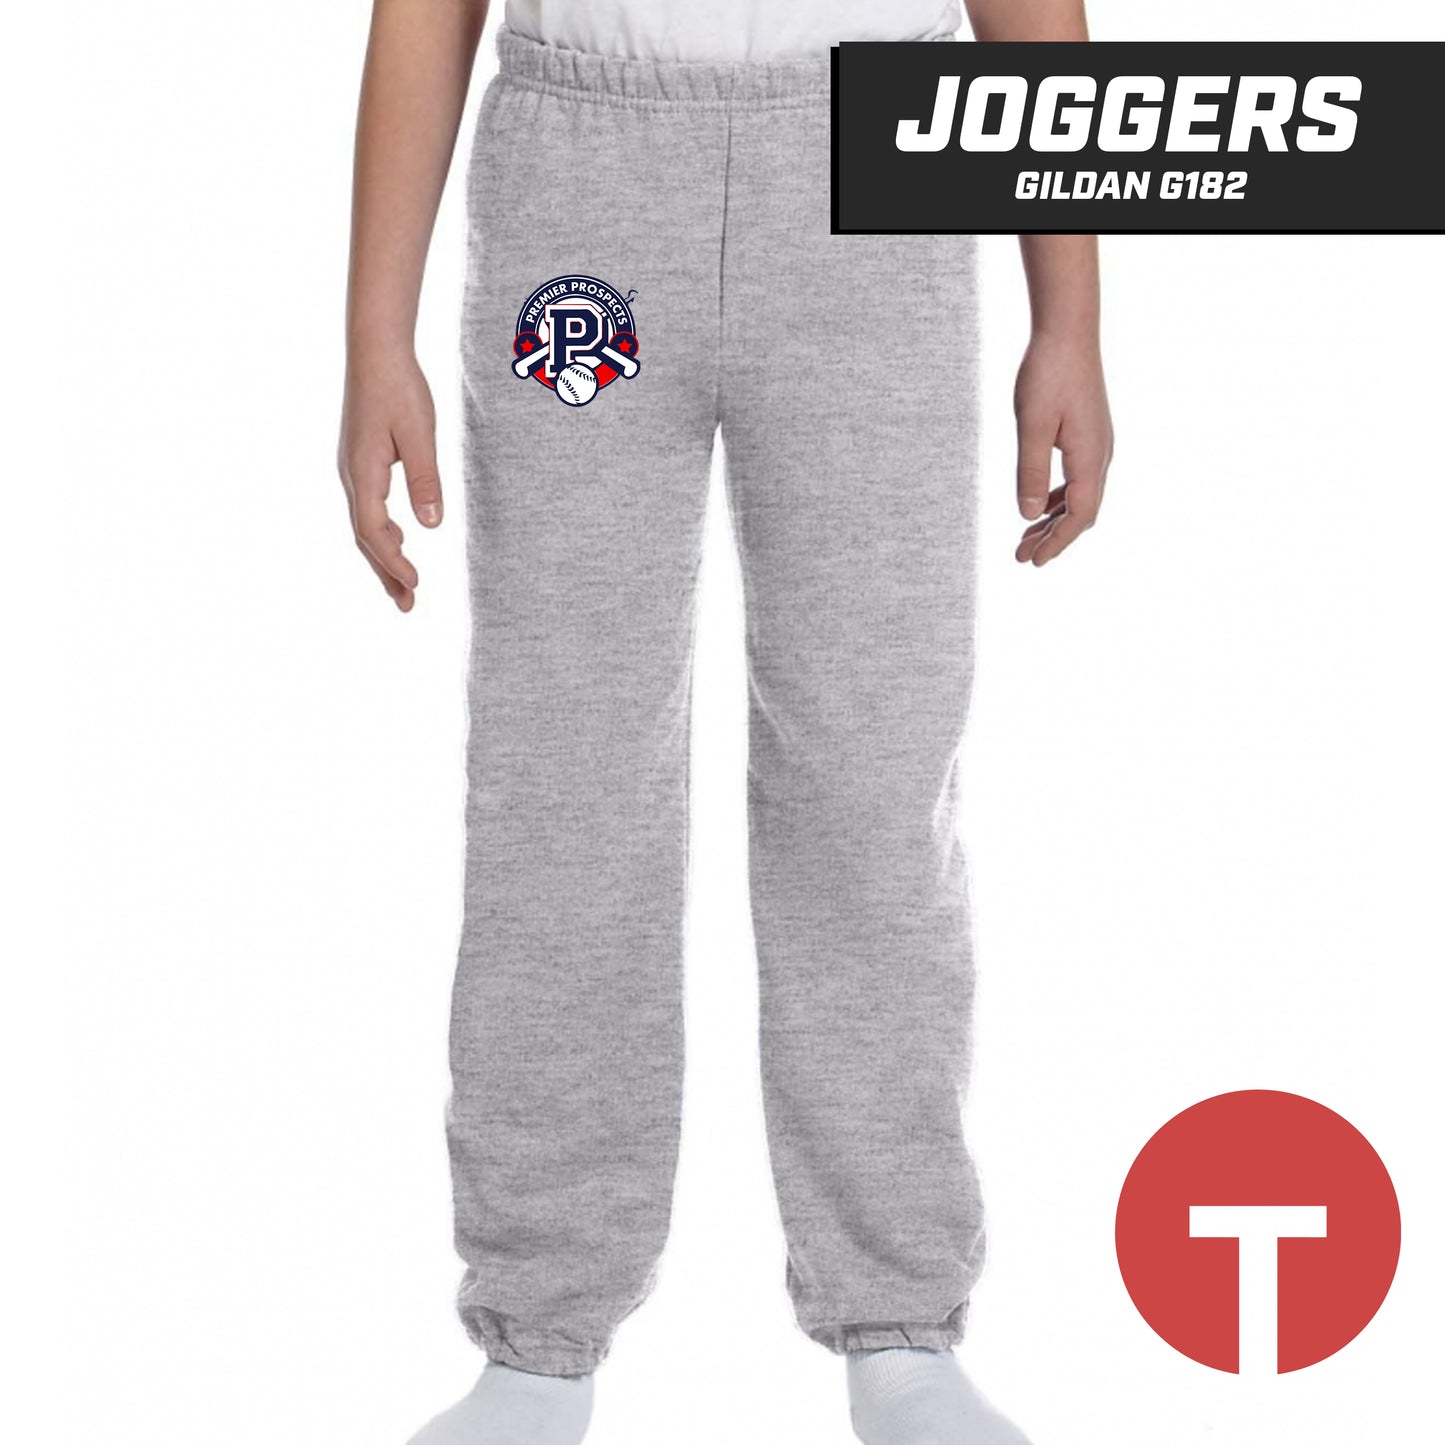 Premier Prospects - Jogger pants Gildan G182